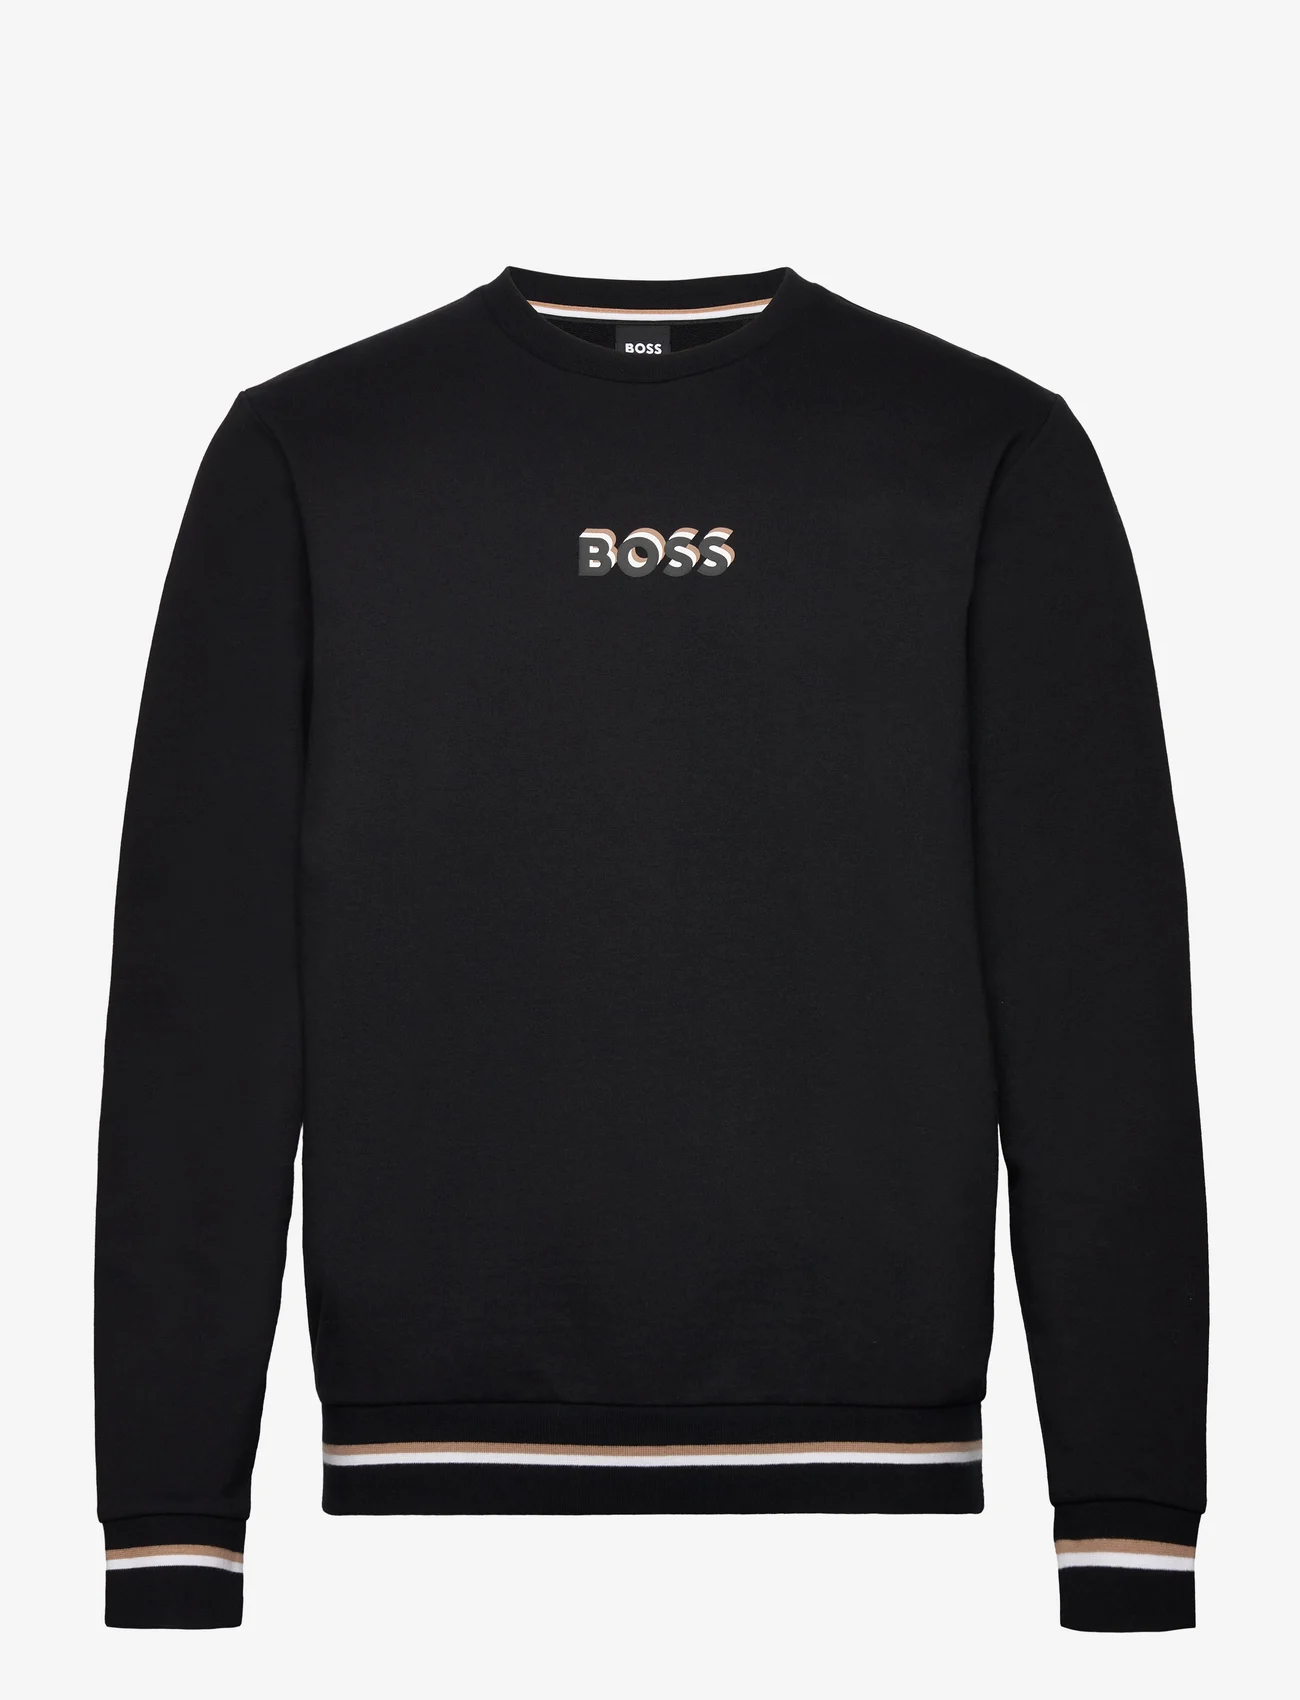 BOSS - Iconic Sweatshirt - pysjamasoverdeler - black - 0